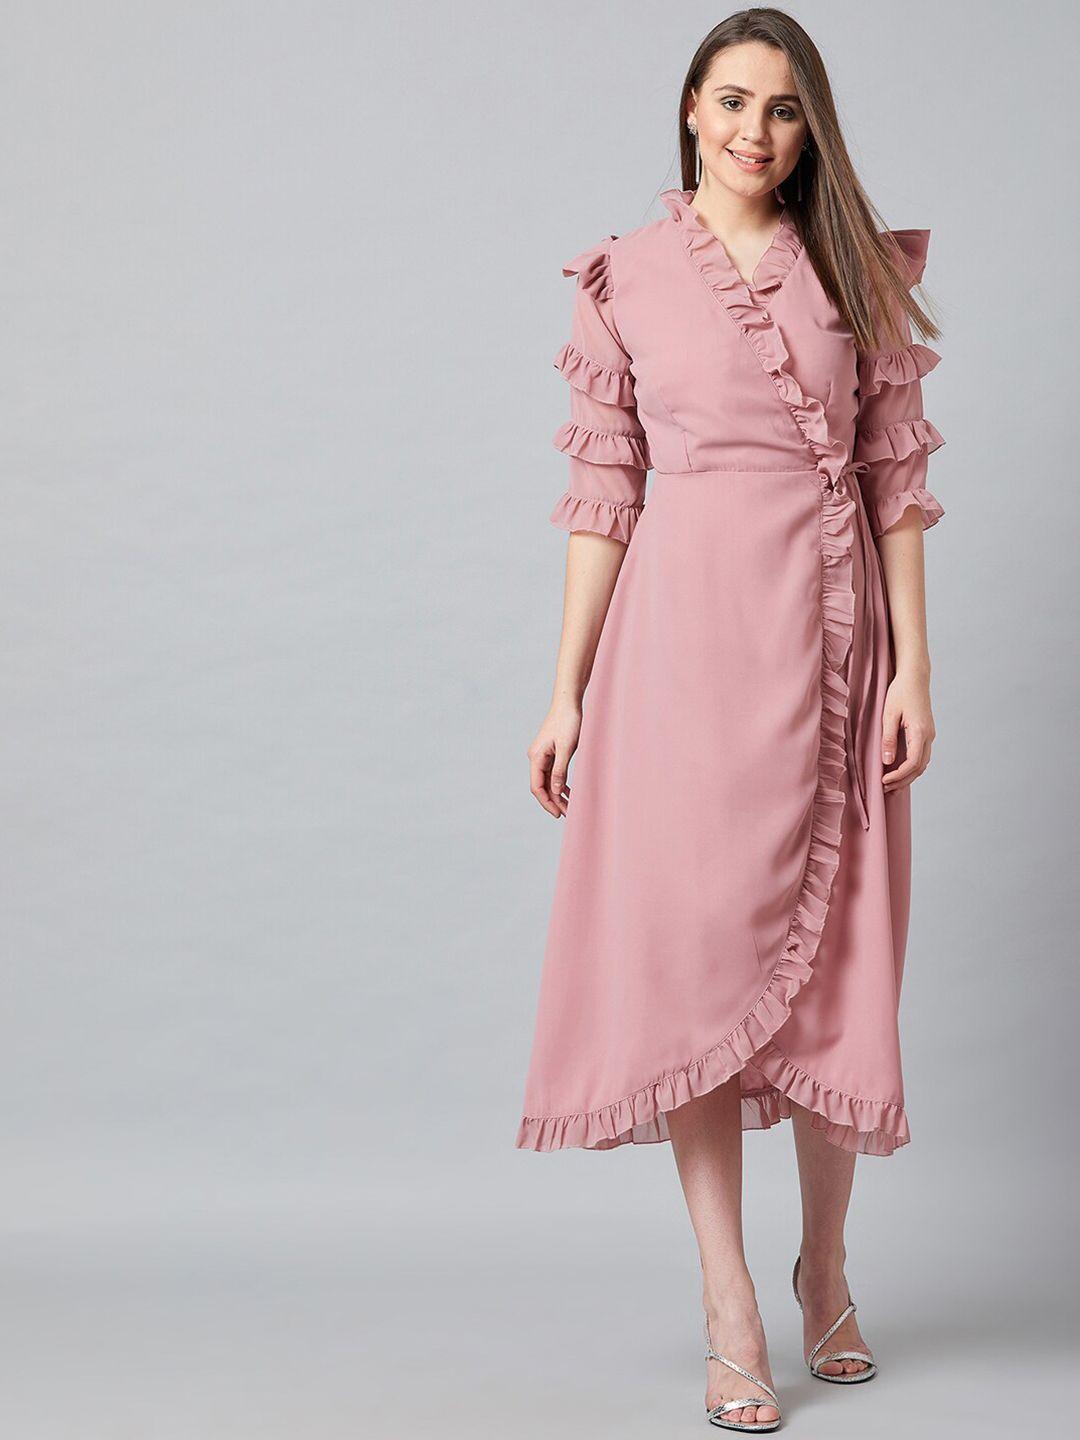 panit pink georgette solid midi wrap dress